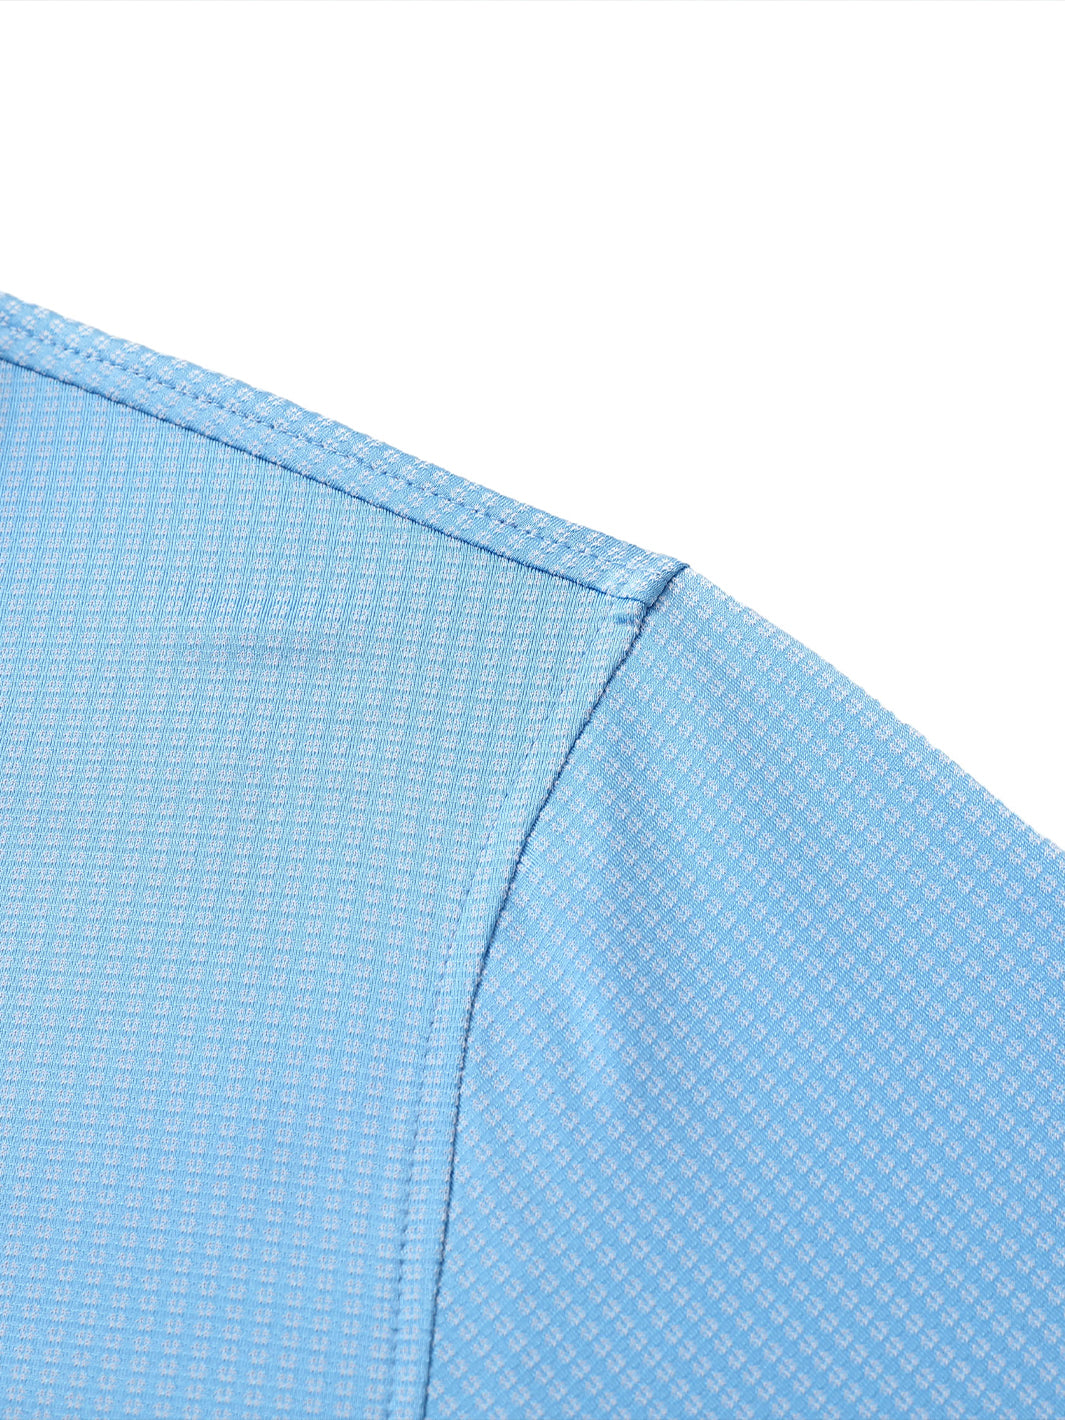 Men's Dry Fit Jacquard Pocket Golf Shirts-Sky Blue